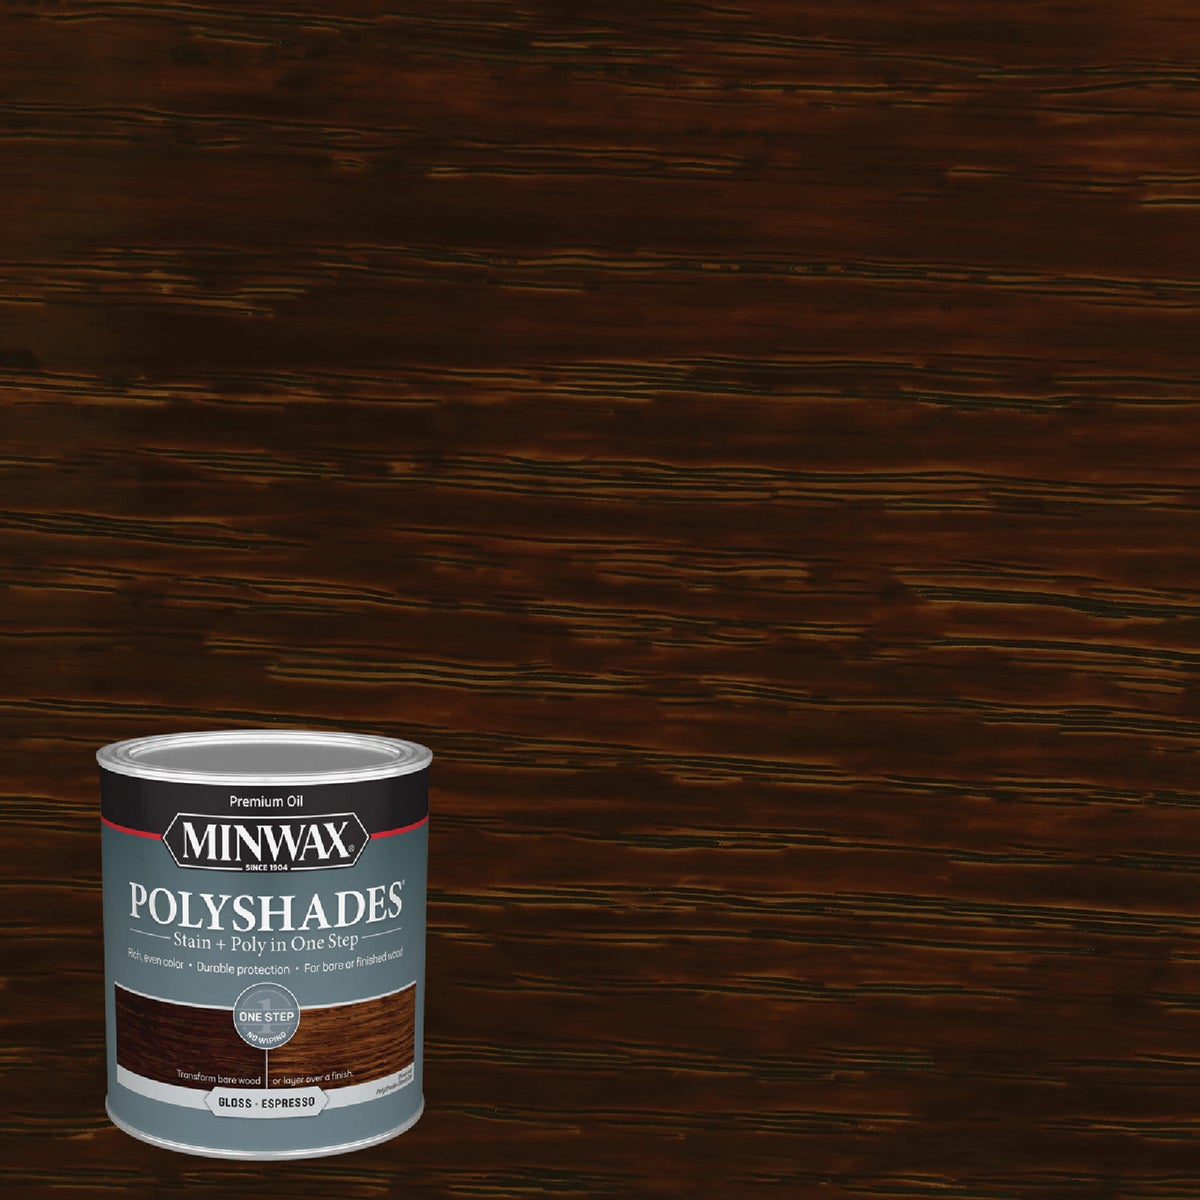 Minwax Polyshades 1 Qt. Gloss Stain & Finish Polyurethane In 1-Step, Espresso